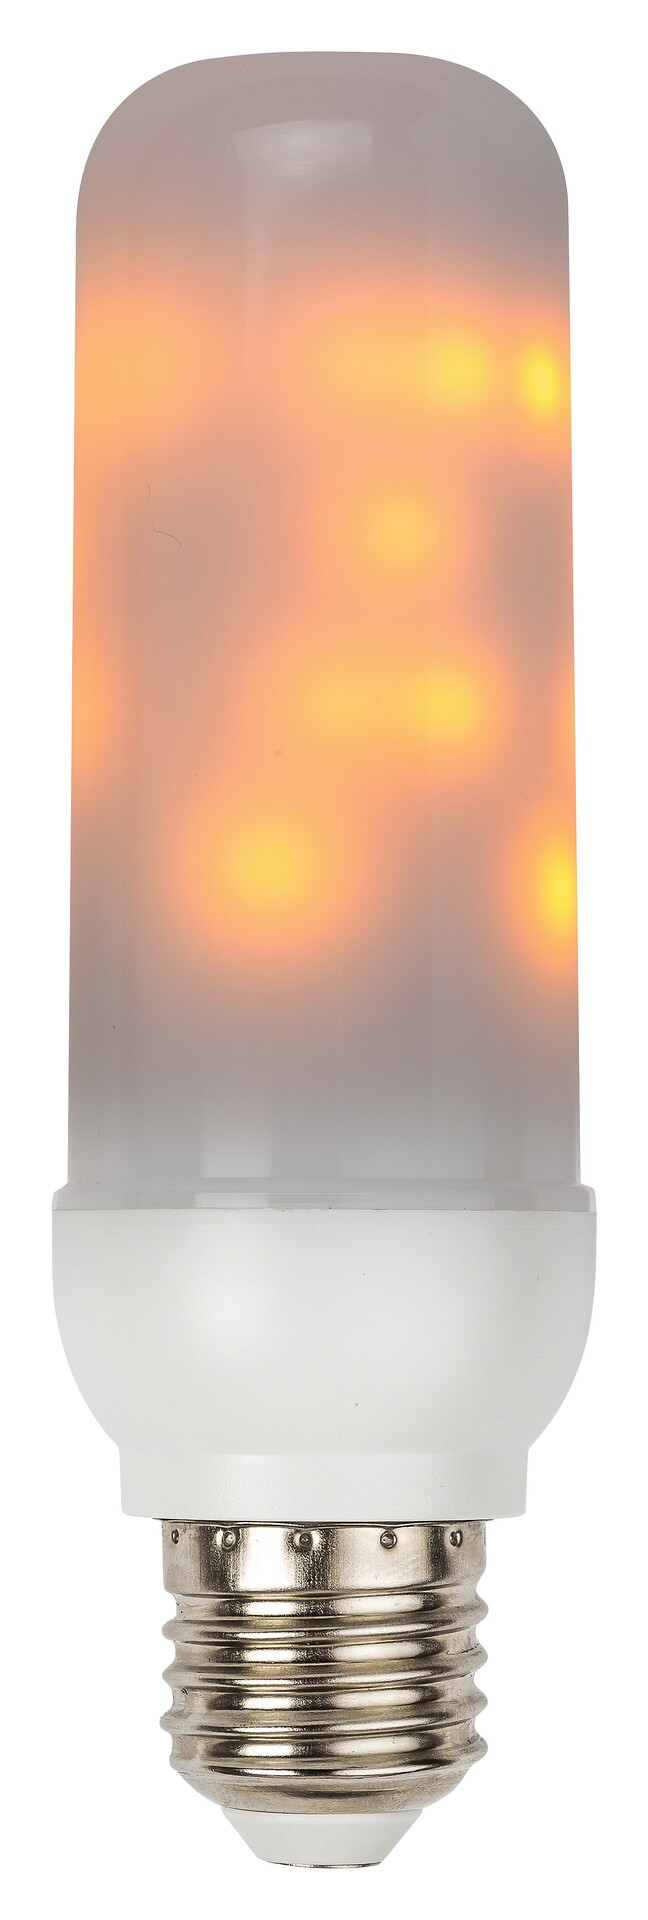 LED-Leuchtmittel 1442, E27, 3W, 1800K, warmweiß, ø60mm